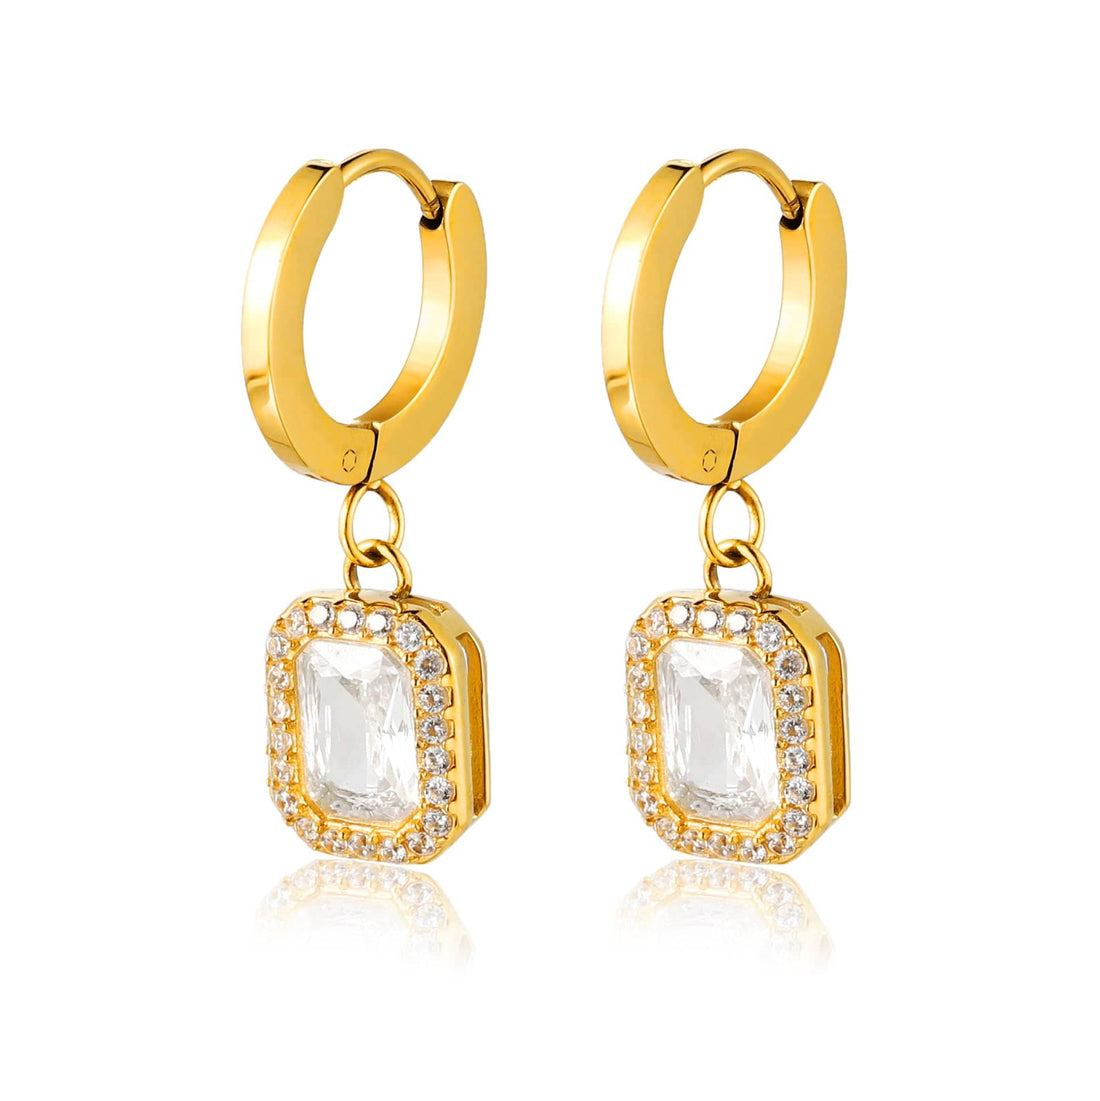 bianco rosso Earrings Diamond Brilliance Earrings cyprus greece jewelry gift free shipping europe worldwide